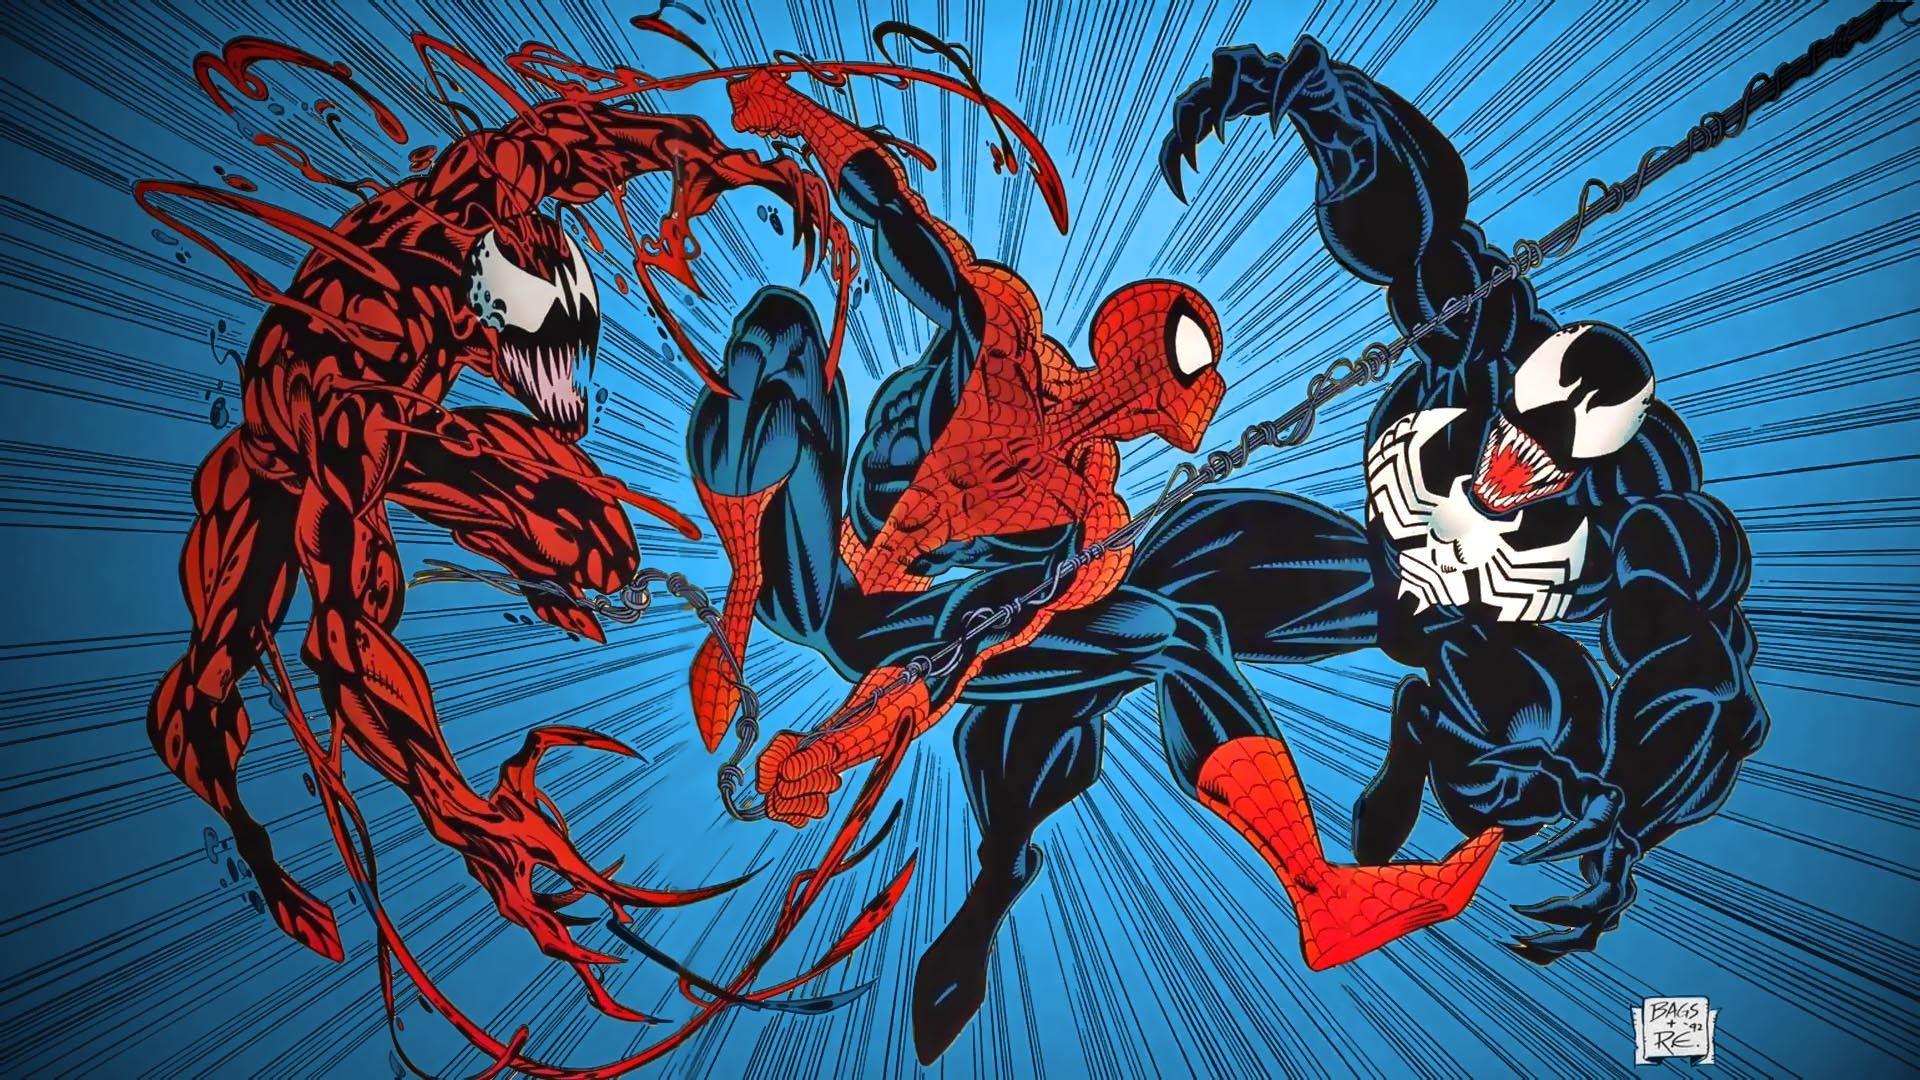 Venom & Carnage Picture. Beautiful image HD Picture & Desktop